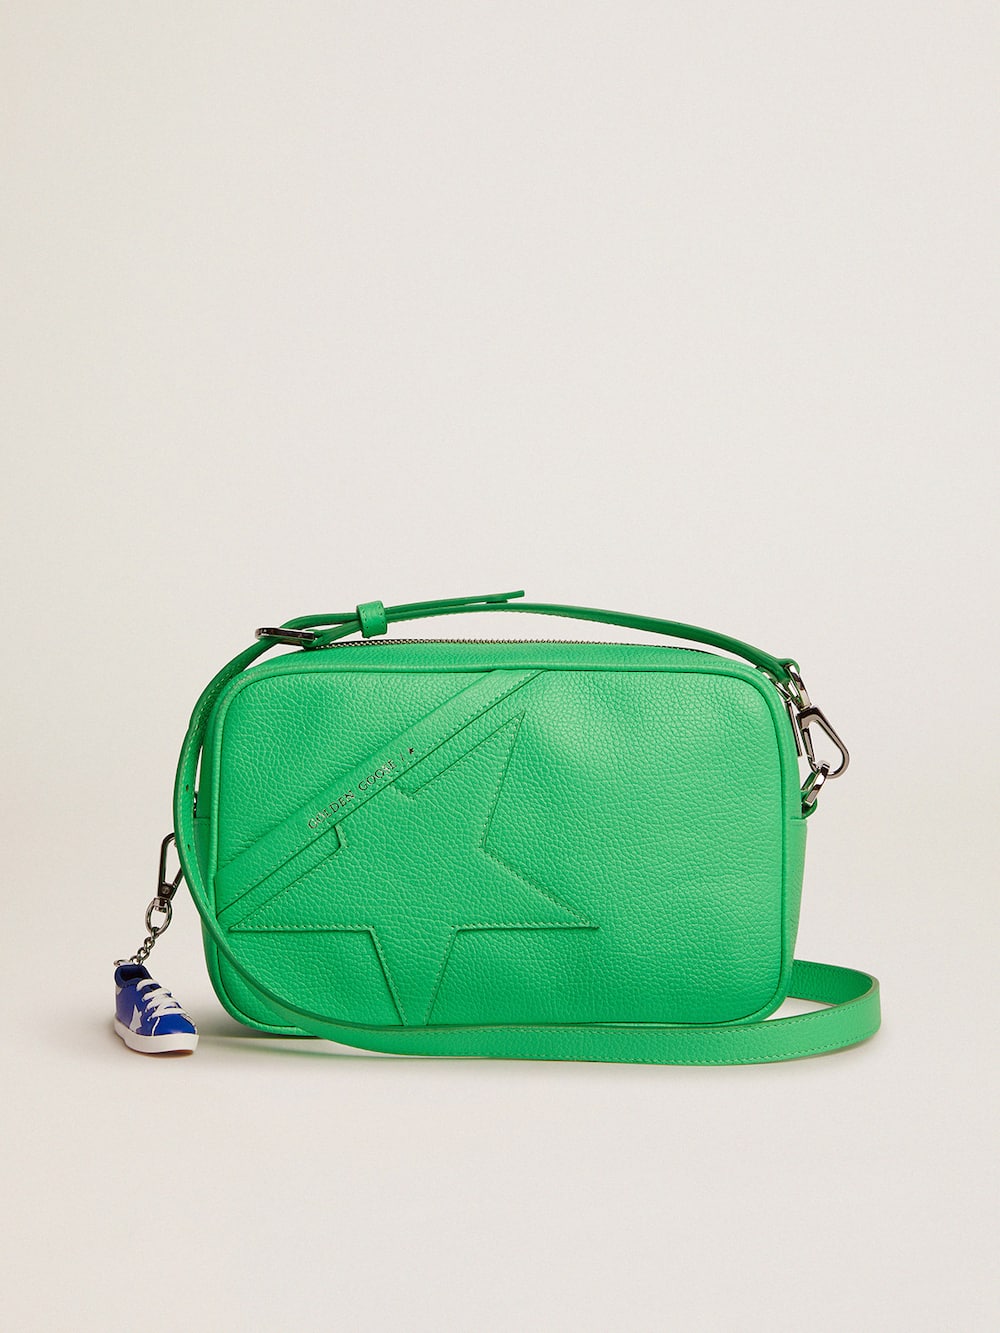 Golden Goose - Borsa Star Bag in pelle martellata color verde fluo e stella ton sur ton in 